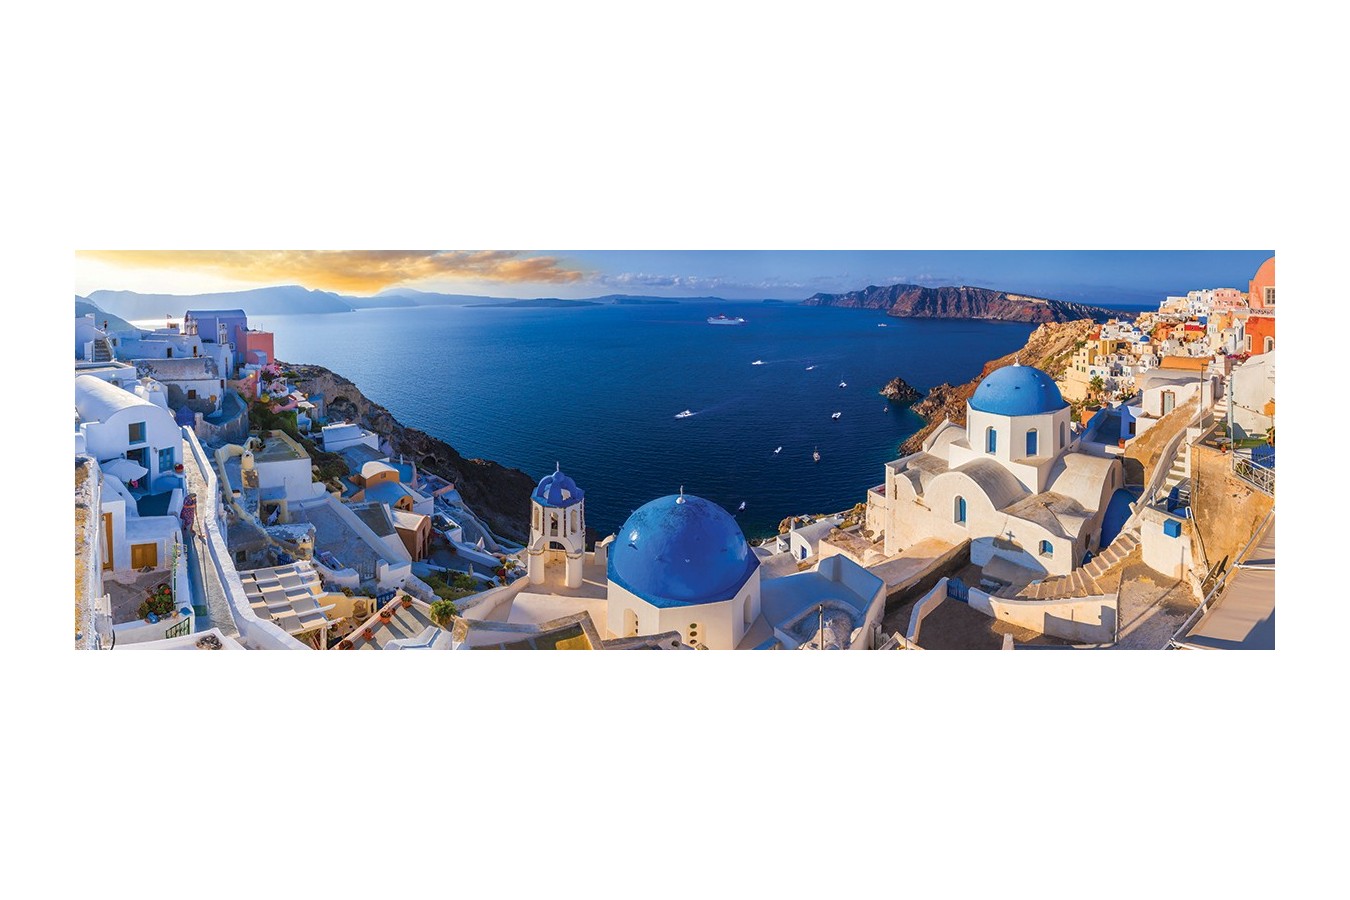 Puzzle panoramic Eurographics - Santorini, 1000 piese (6010-5300)